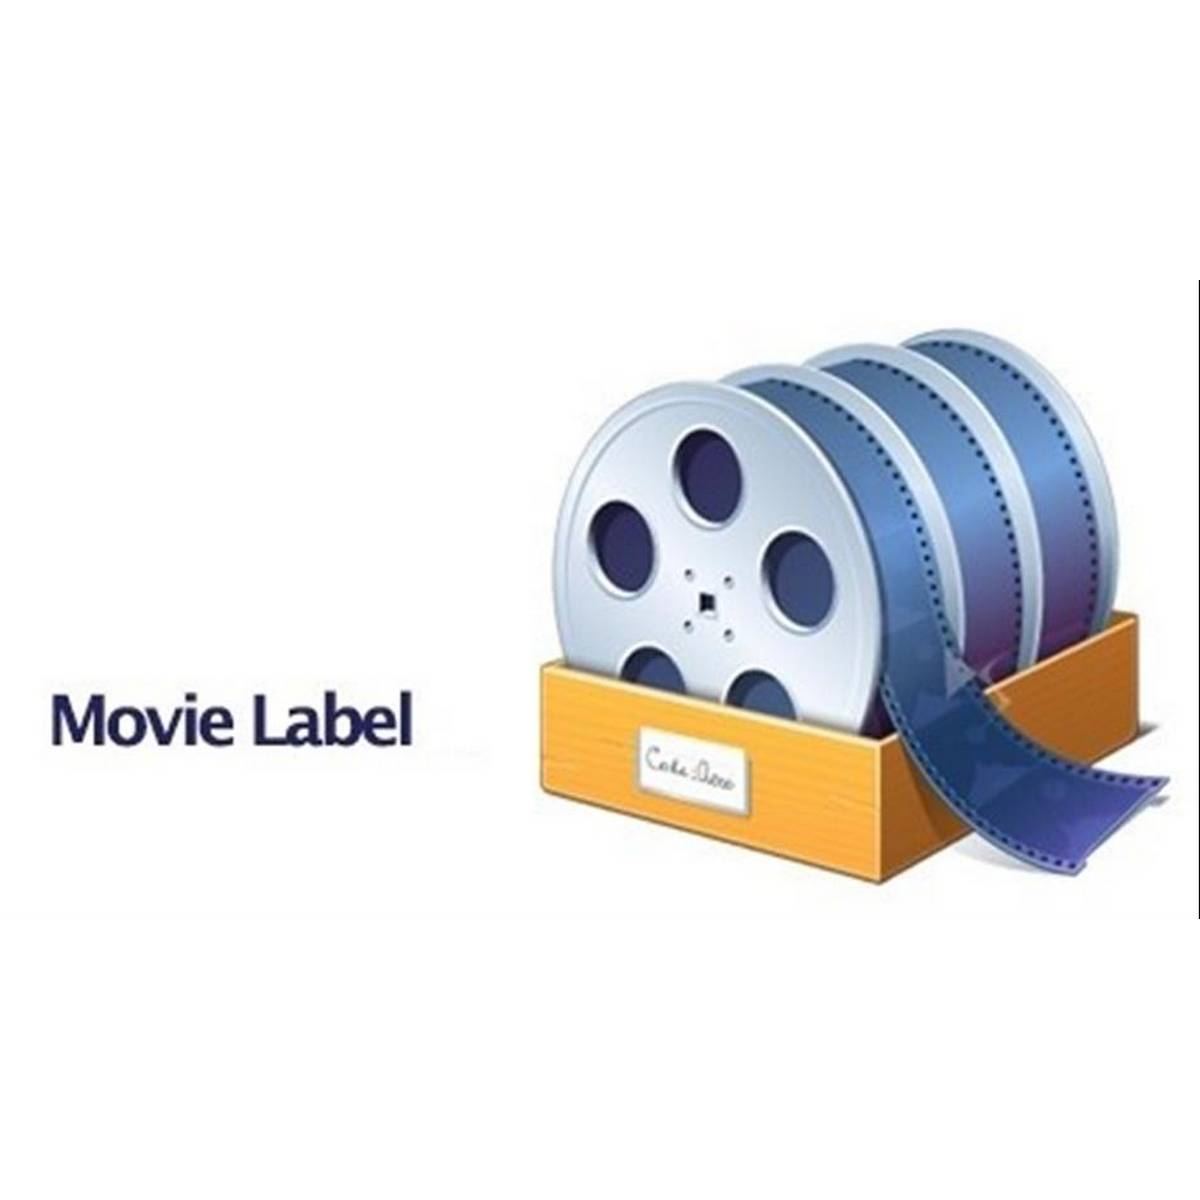 dvd movie labels free download